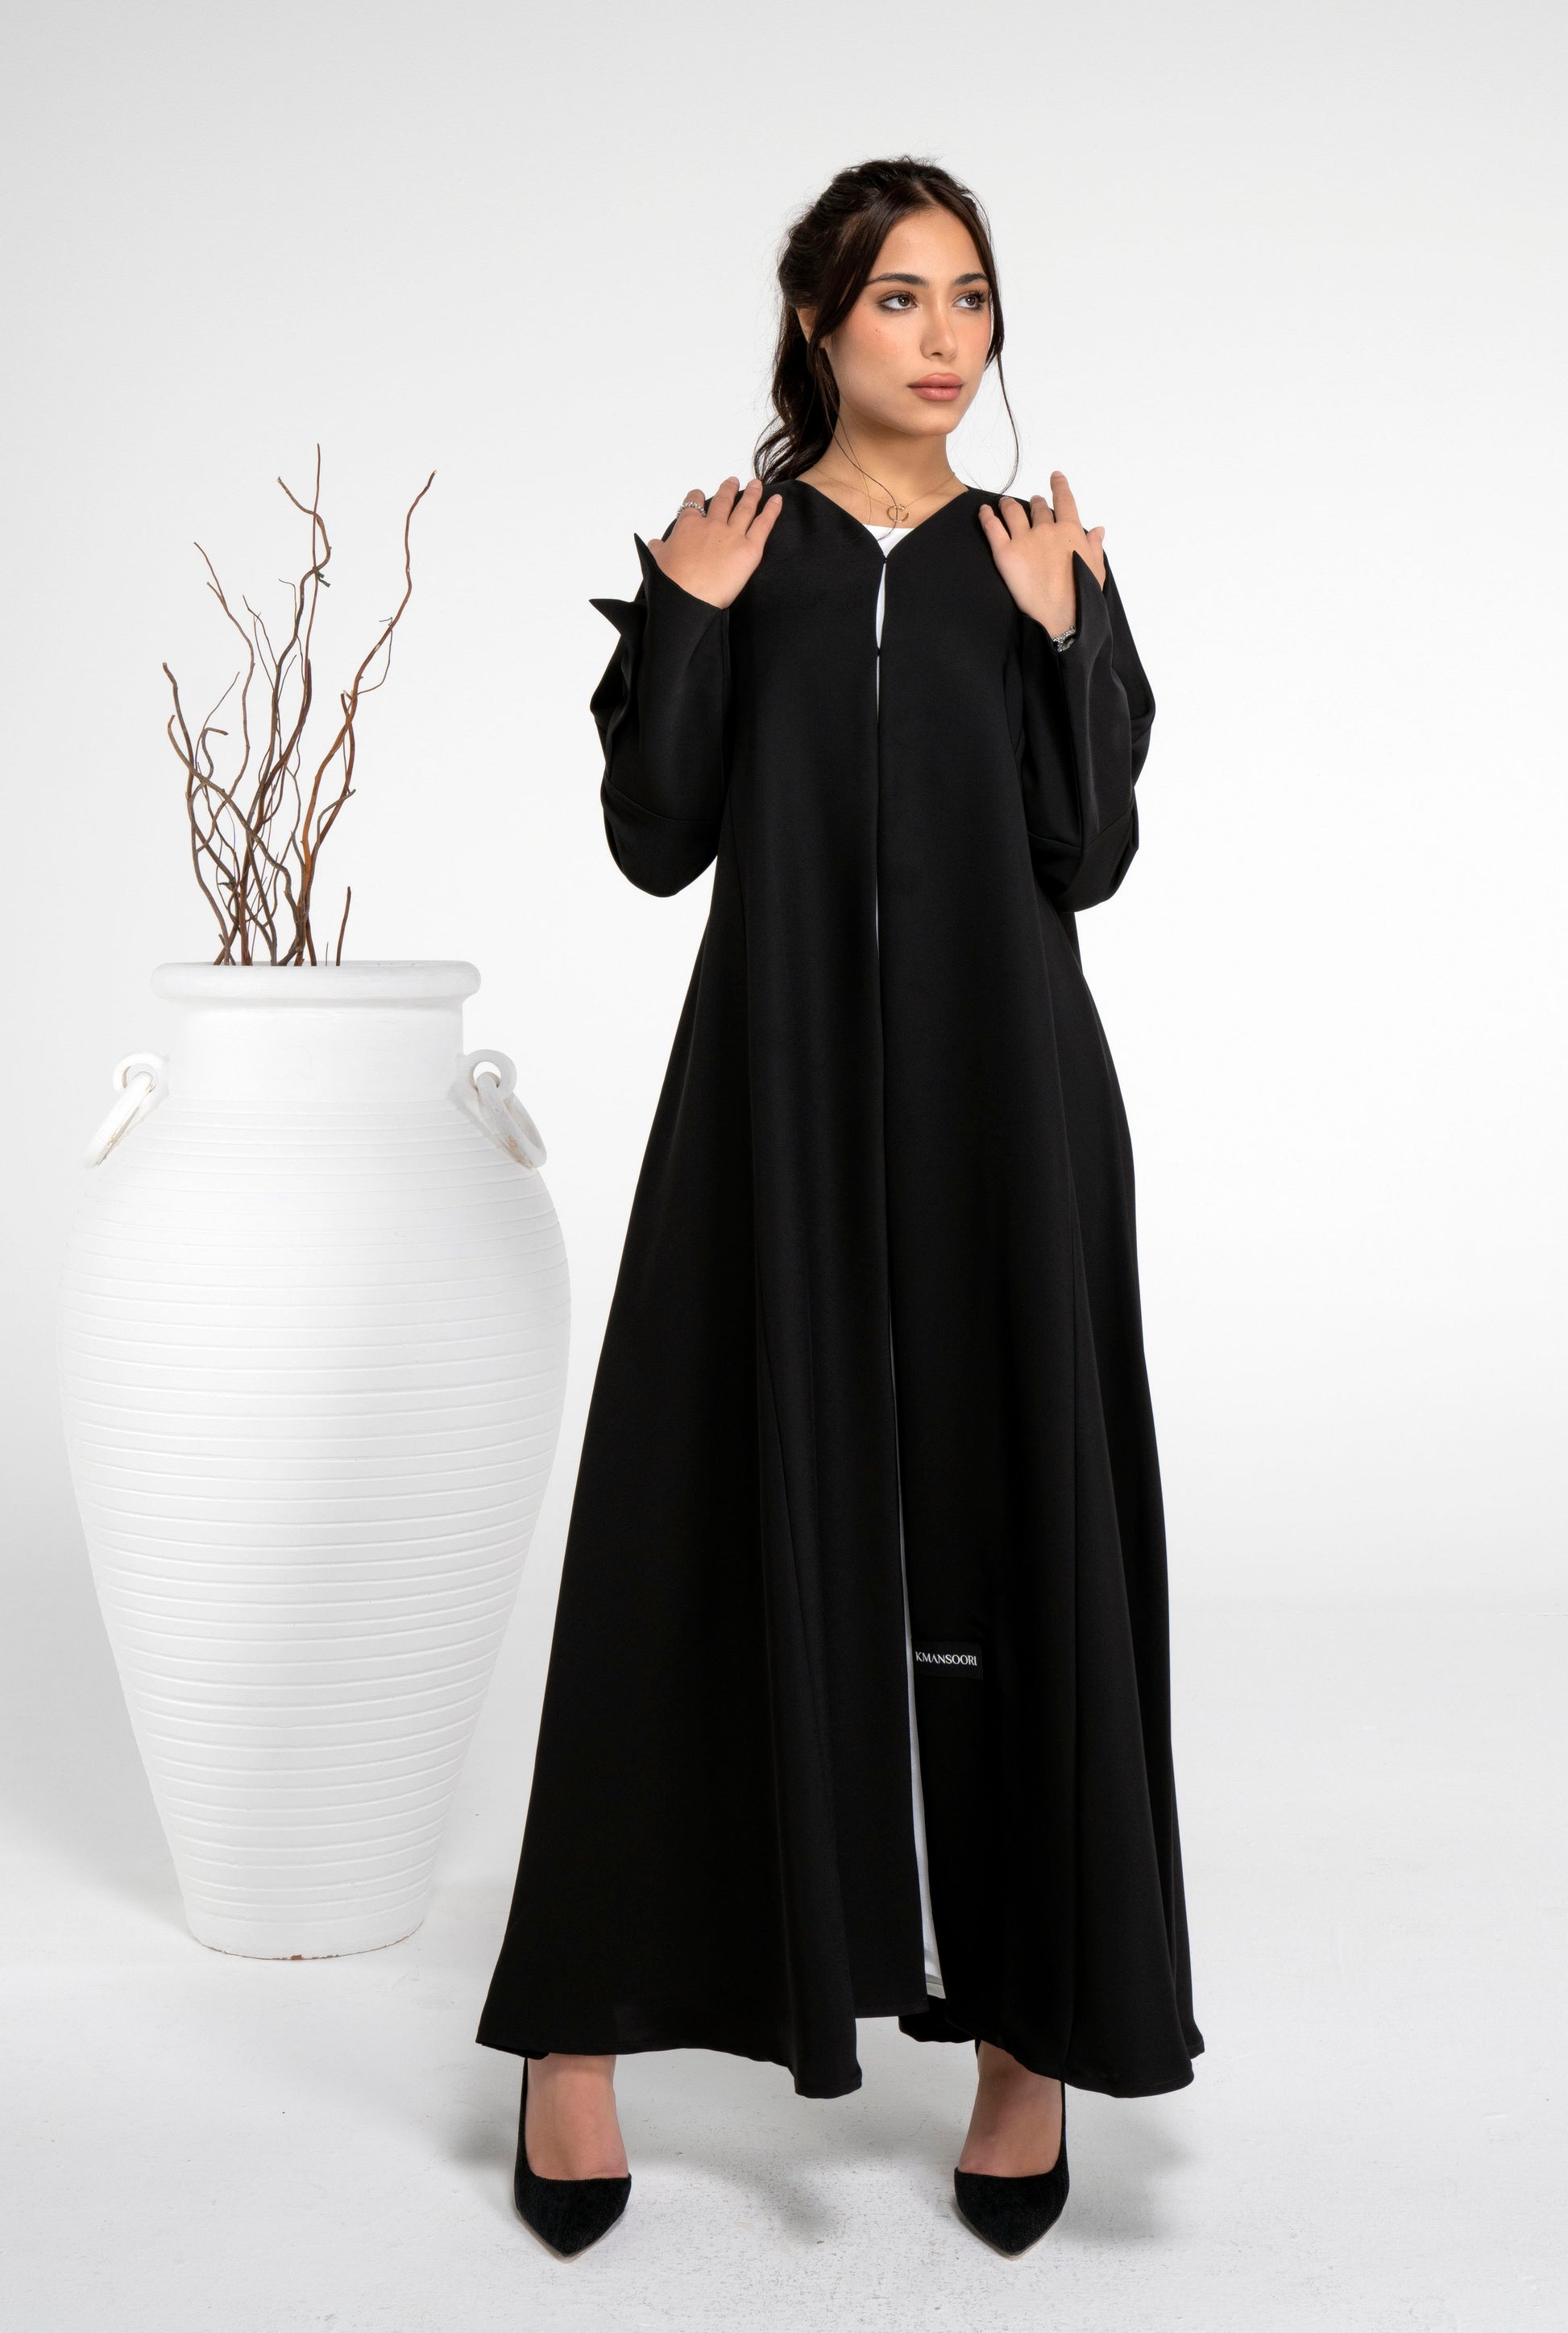 Girl wearing Black abaya with stylized pattern sleeve